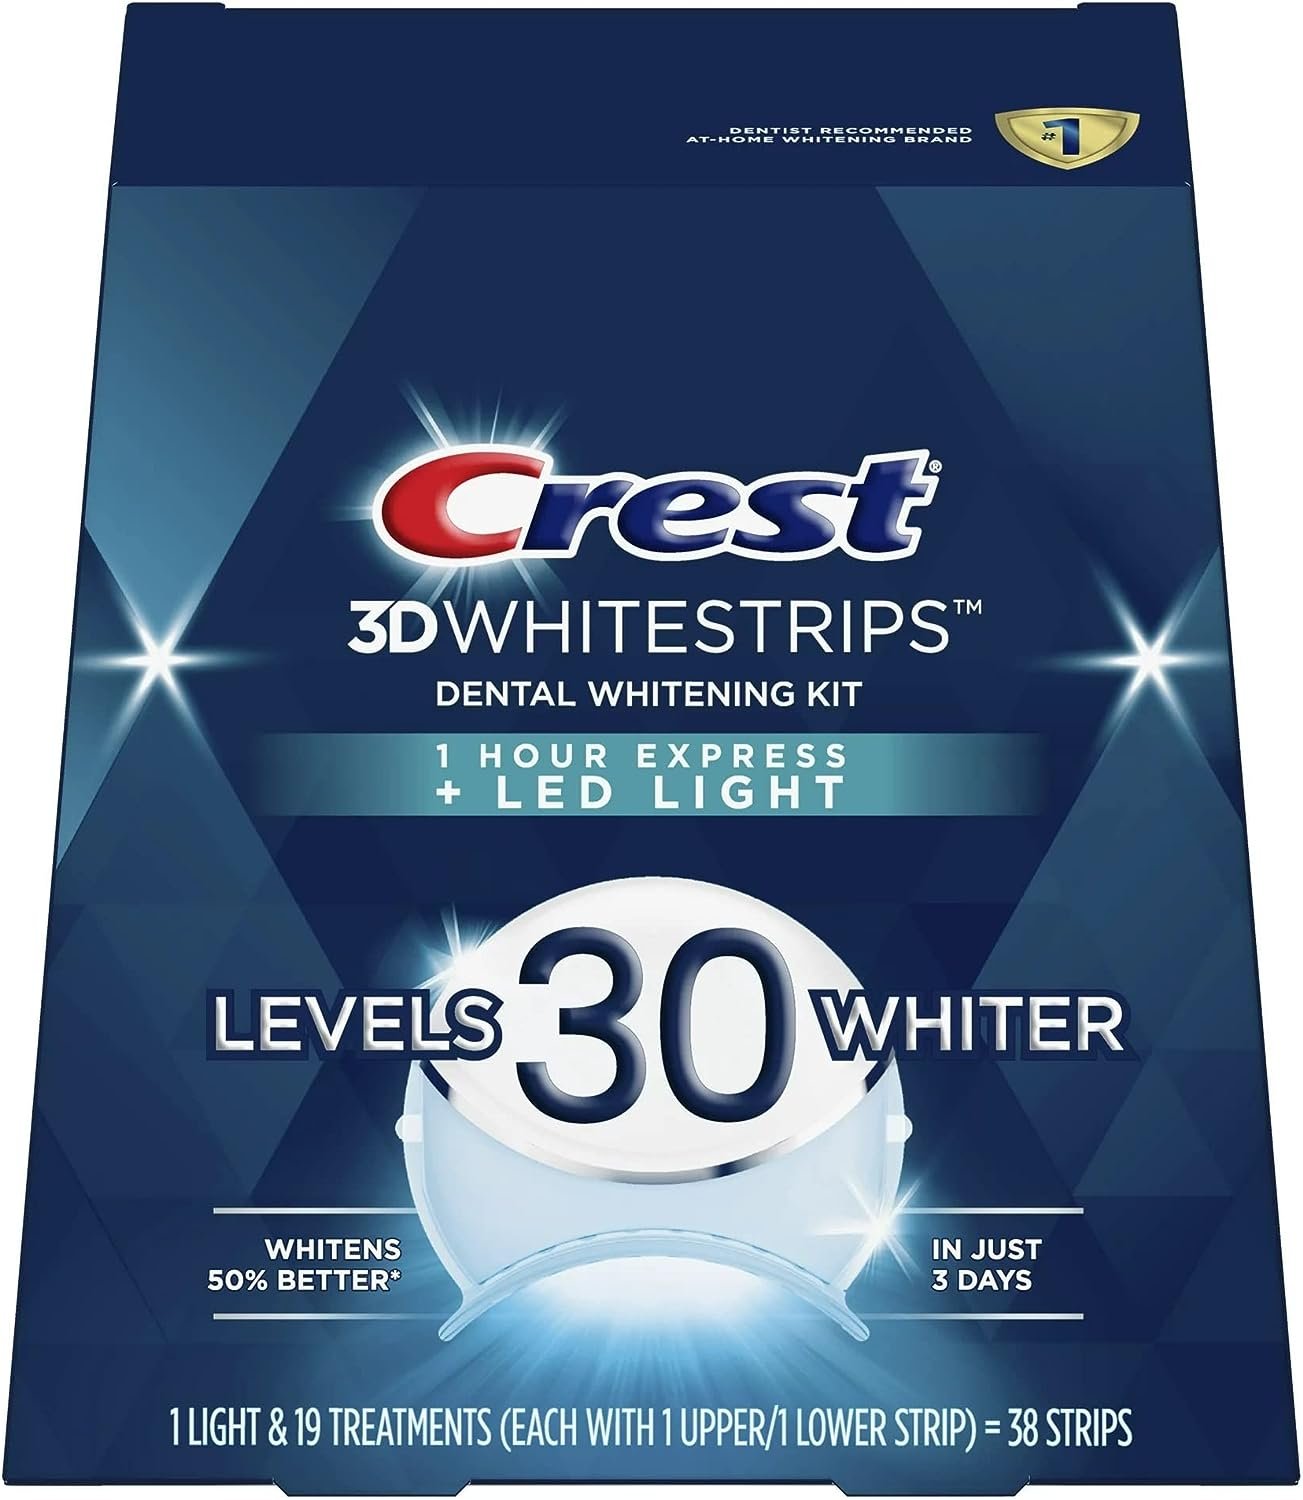 Crest 3DWhitestrips 1 Hour Express + LED Light Teeth Whitening Kit, 19 Treatments